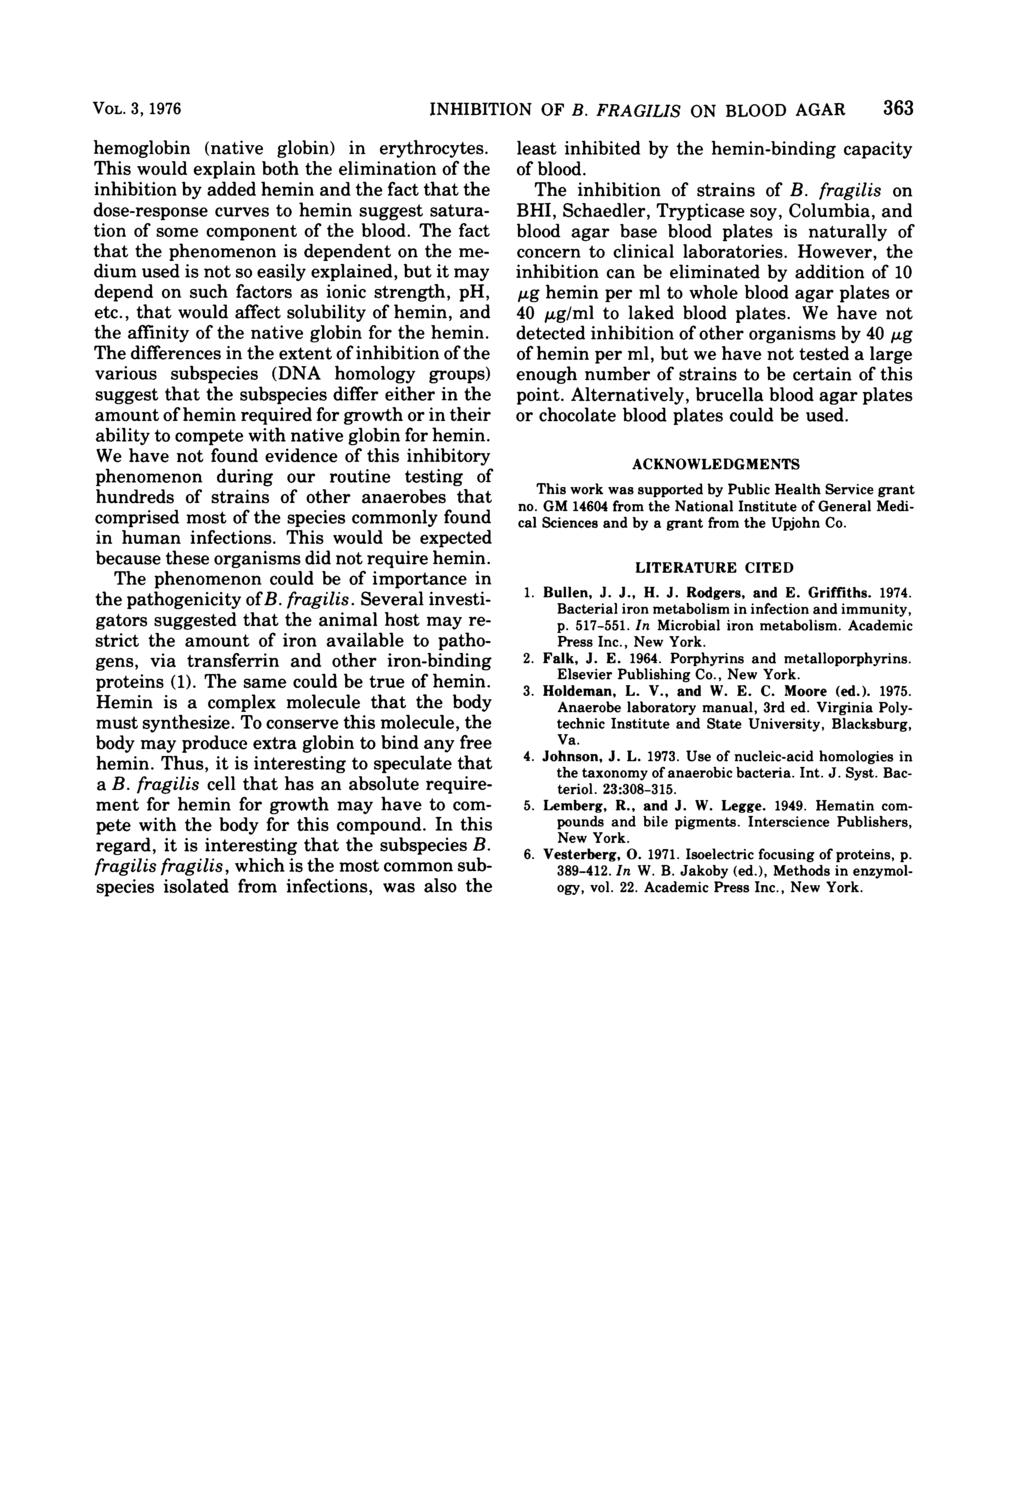 VOL. 3, 1976 hemoglobin (native globin) in erythrocytes.